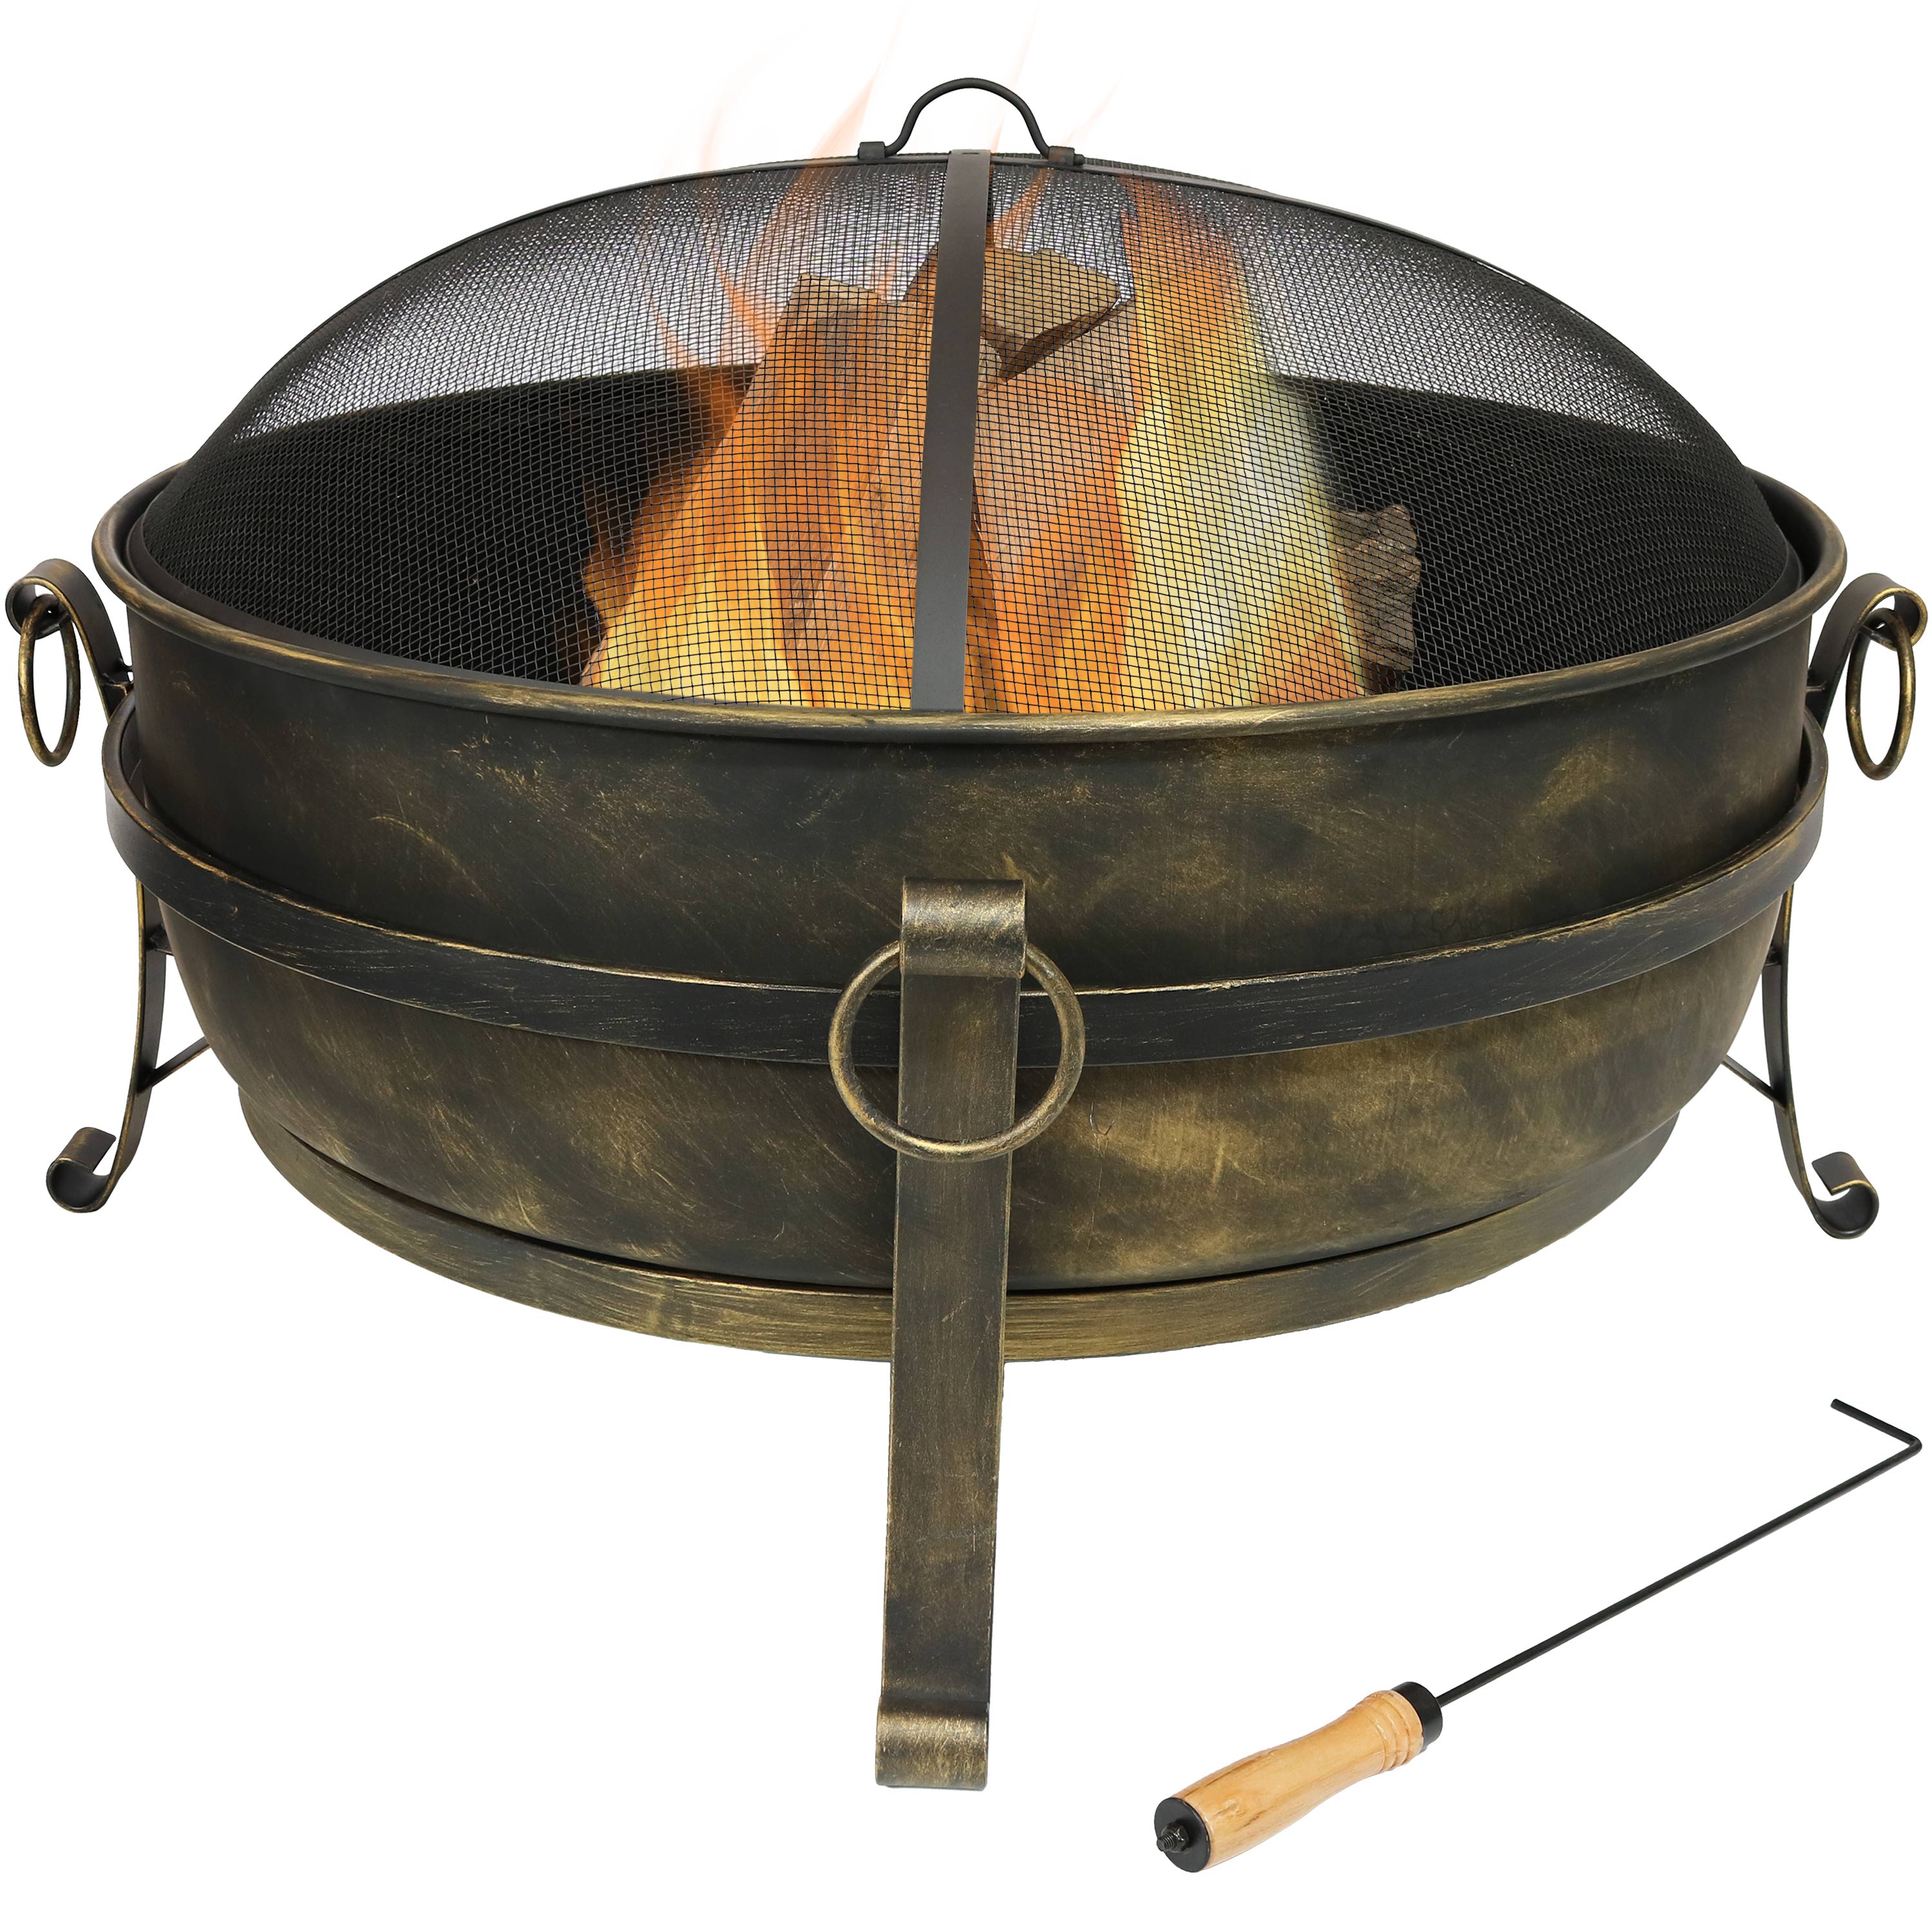 Sunnydaze Steel Cauldron Fire Pit with Spark Screen, 34-Inch